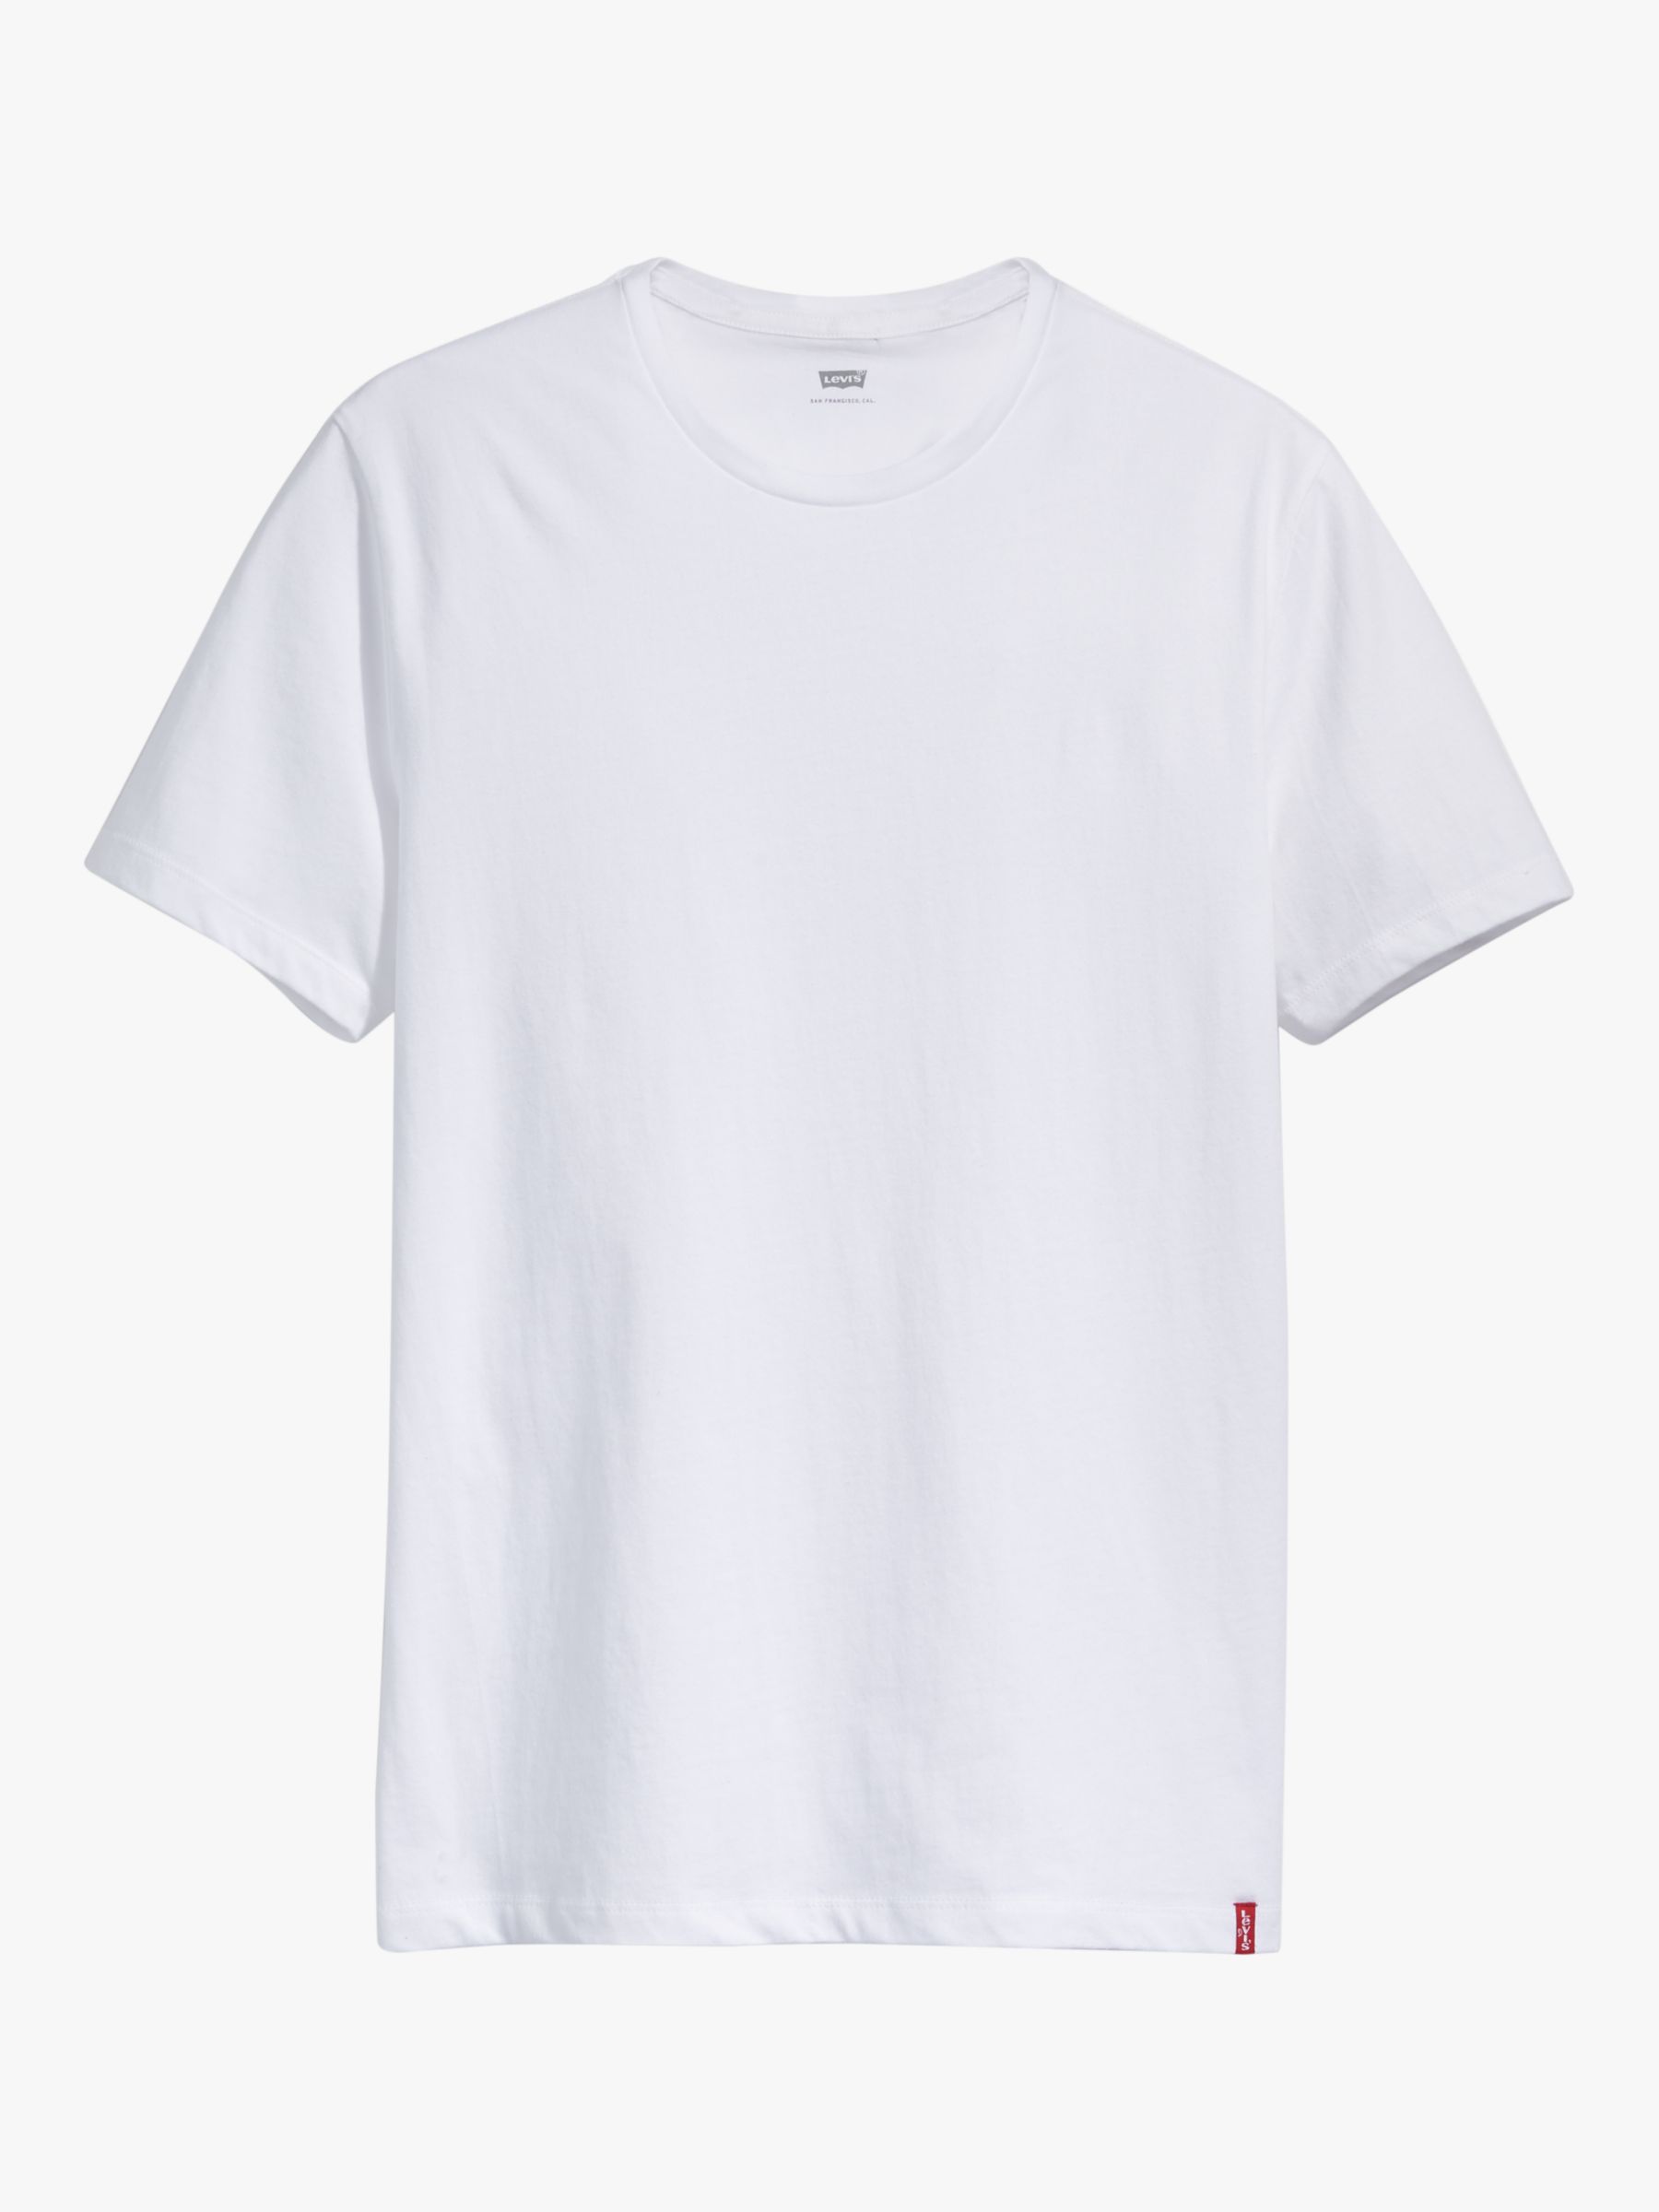 Levi's Cotton Slim Fit Crew Neck T-Shirt, Pack of 2, Blue/White at John ...